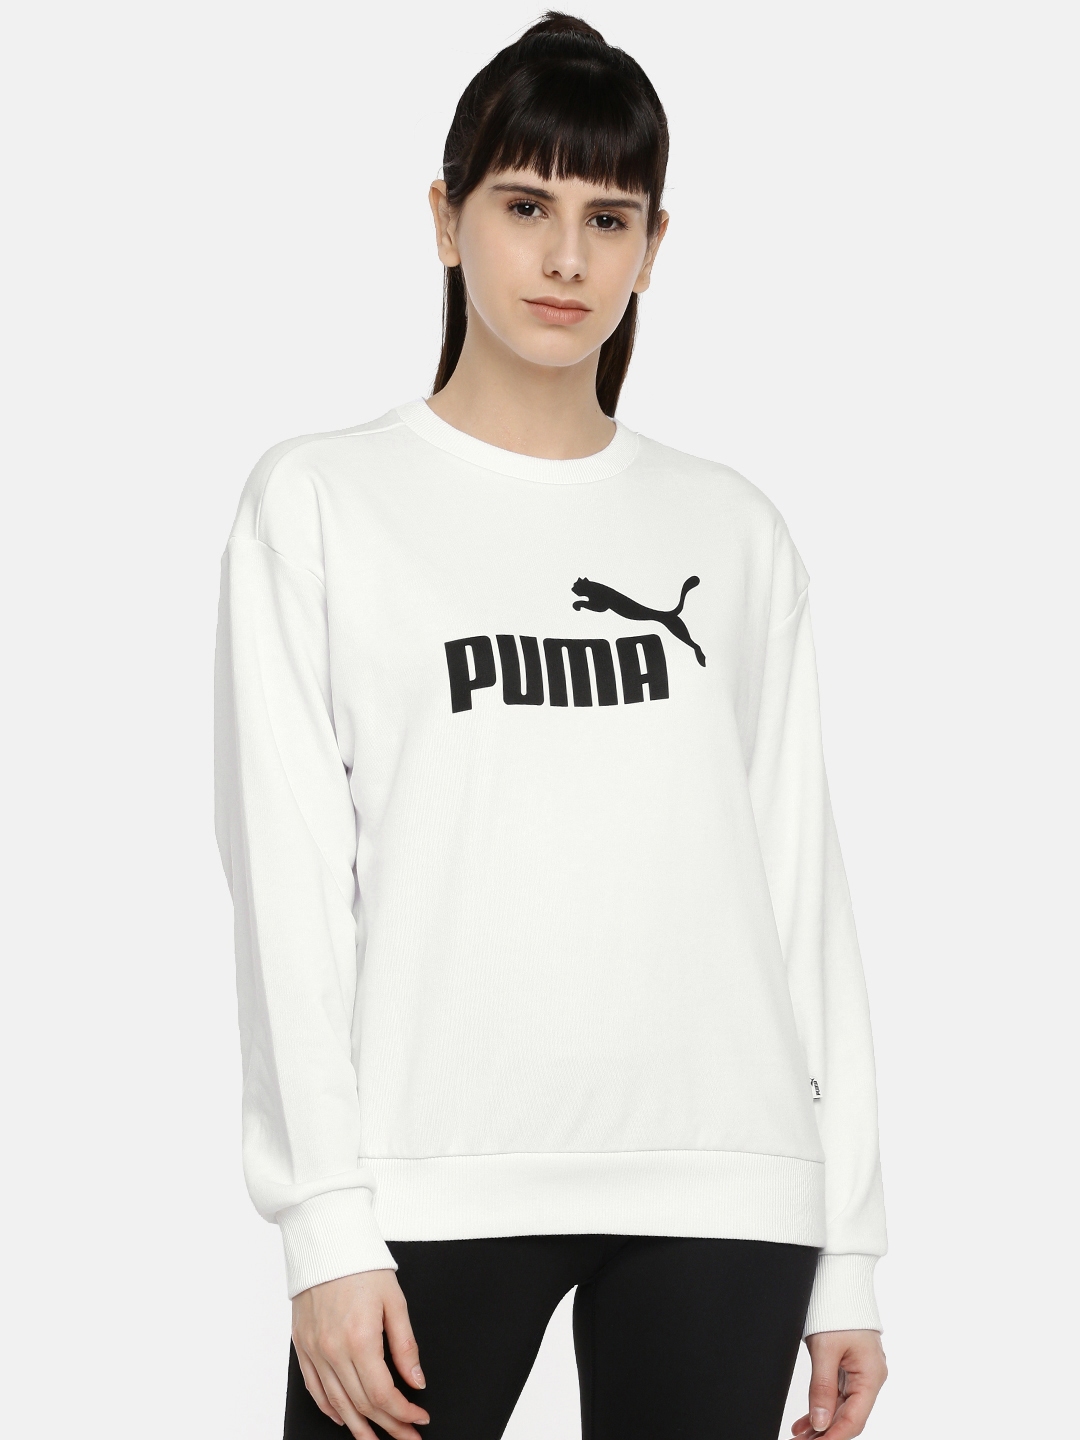 Buy Puma Women White Printed Sweatshirt - Sweatshirts for Women ...